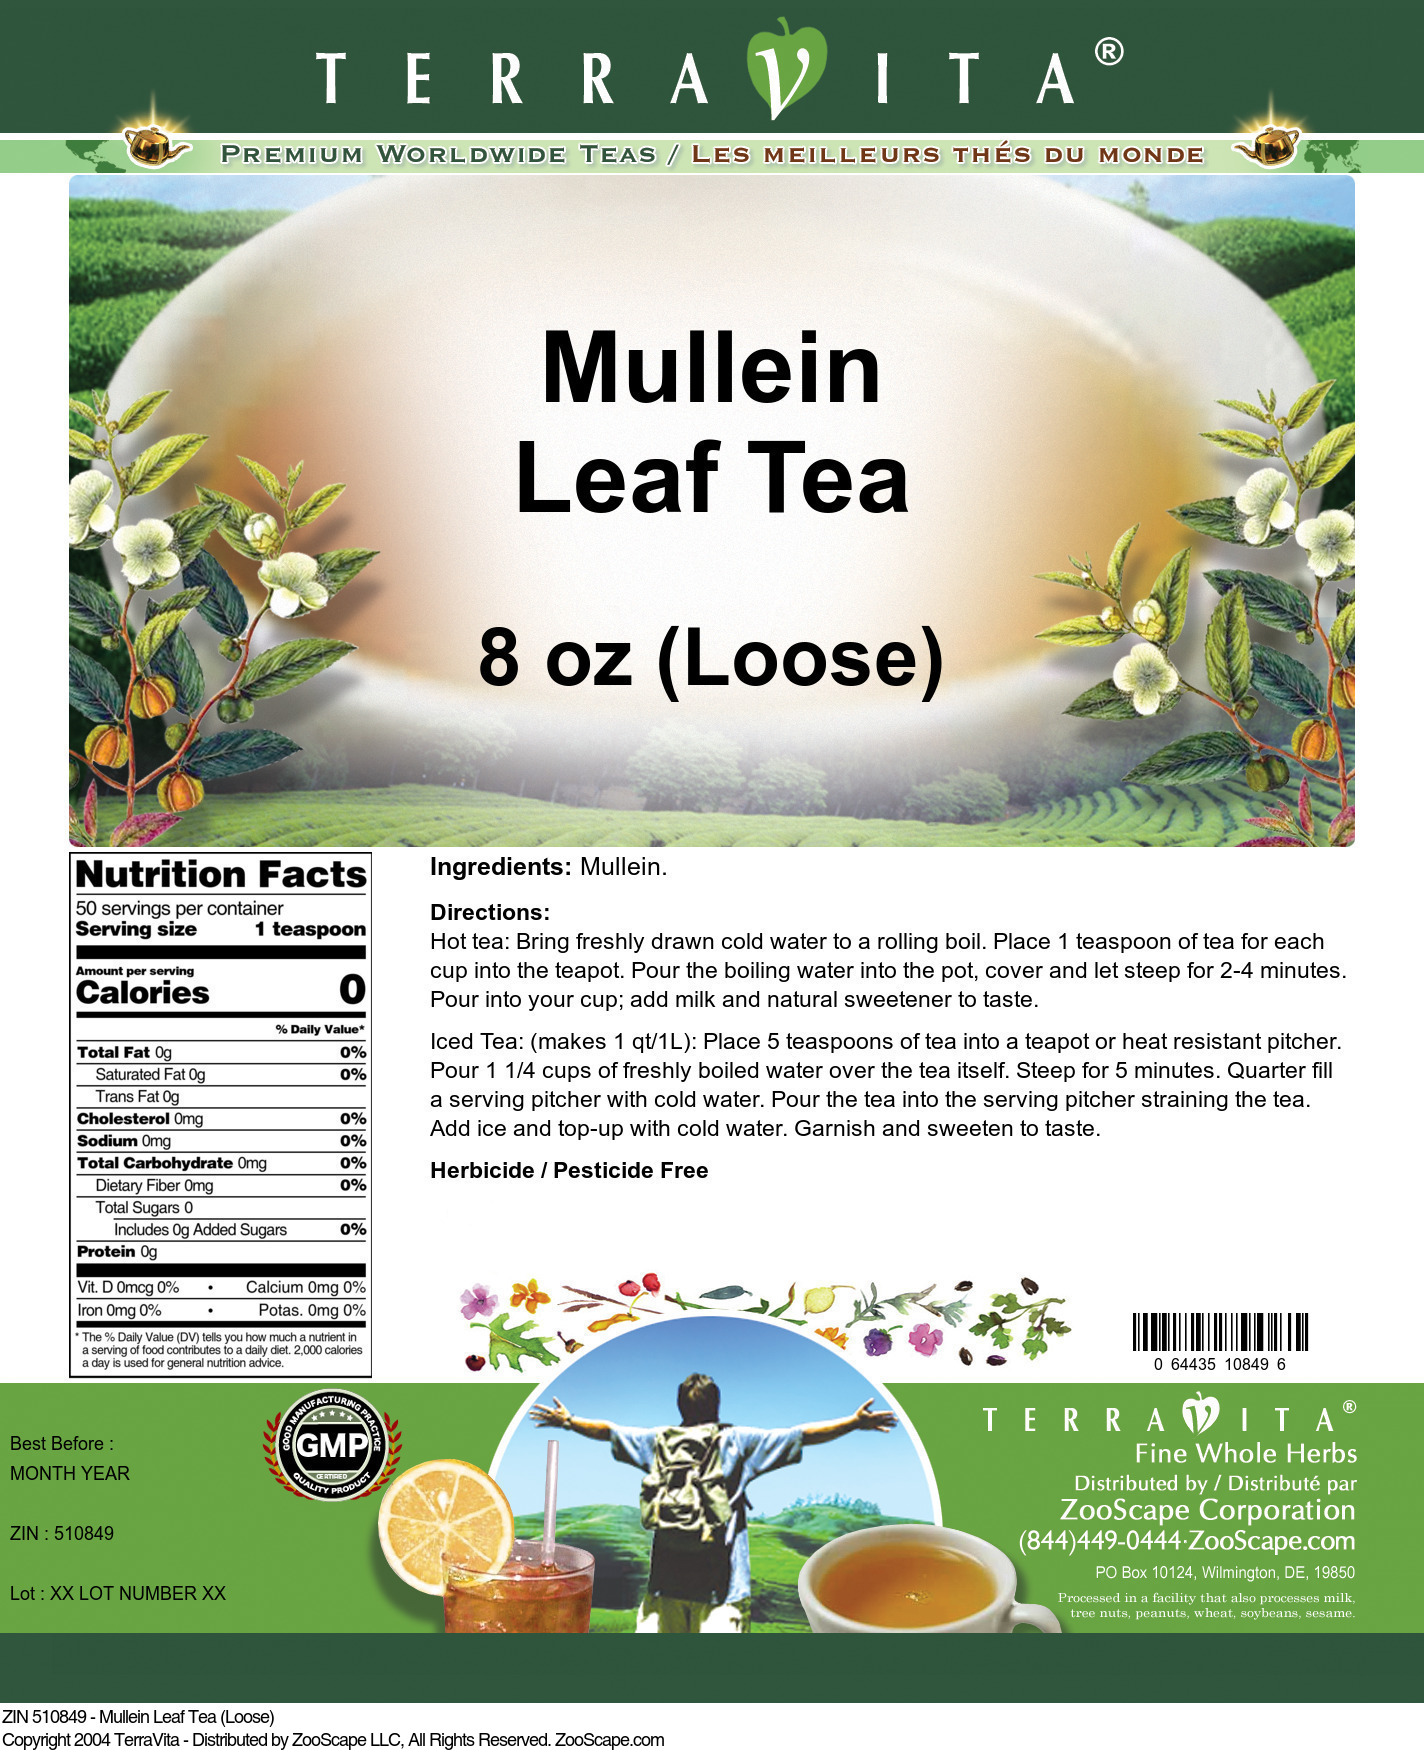 Mullein Leaf Tea (Loose) - Label